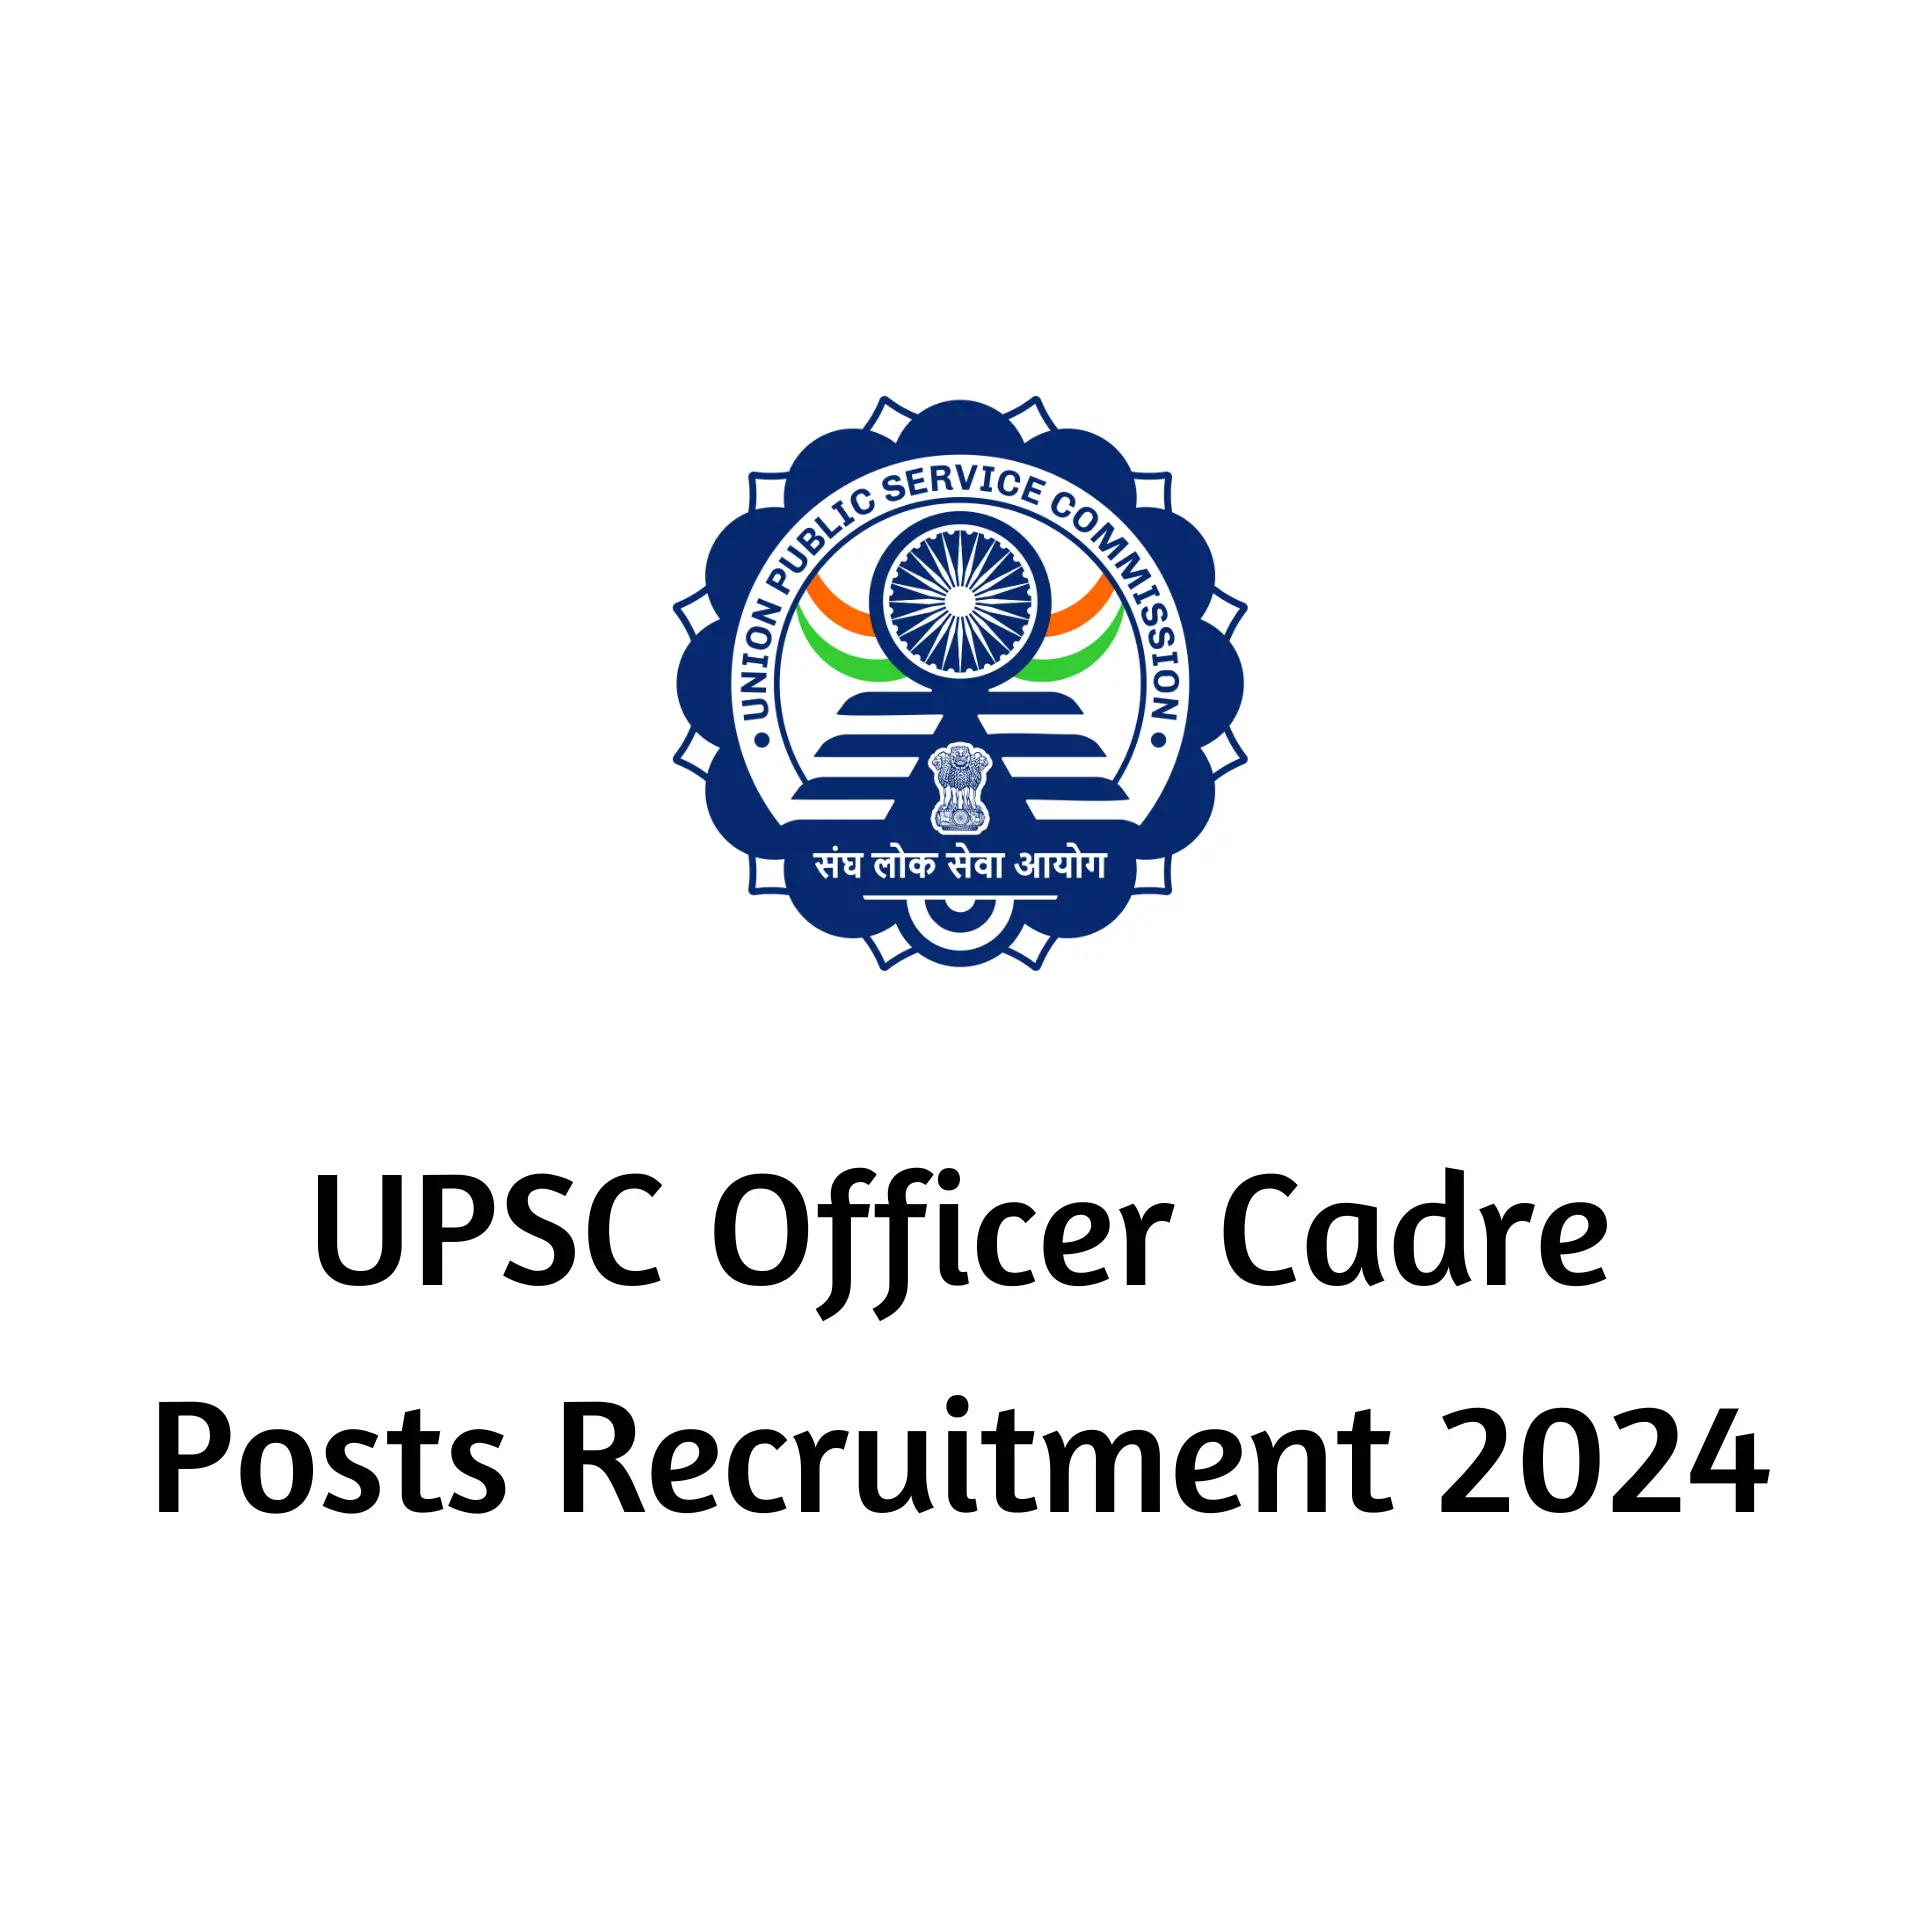 UPSC Officer Cadre Posts Recruitment 2024